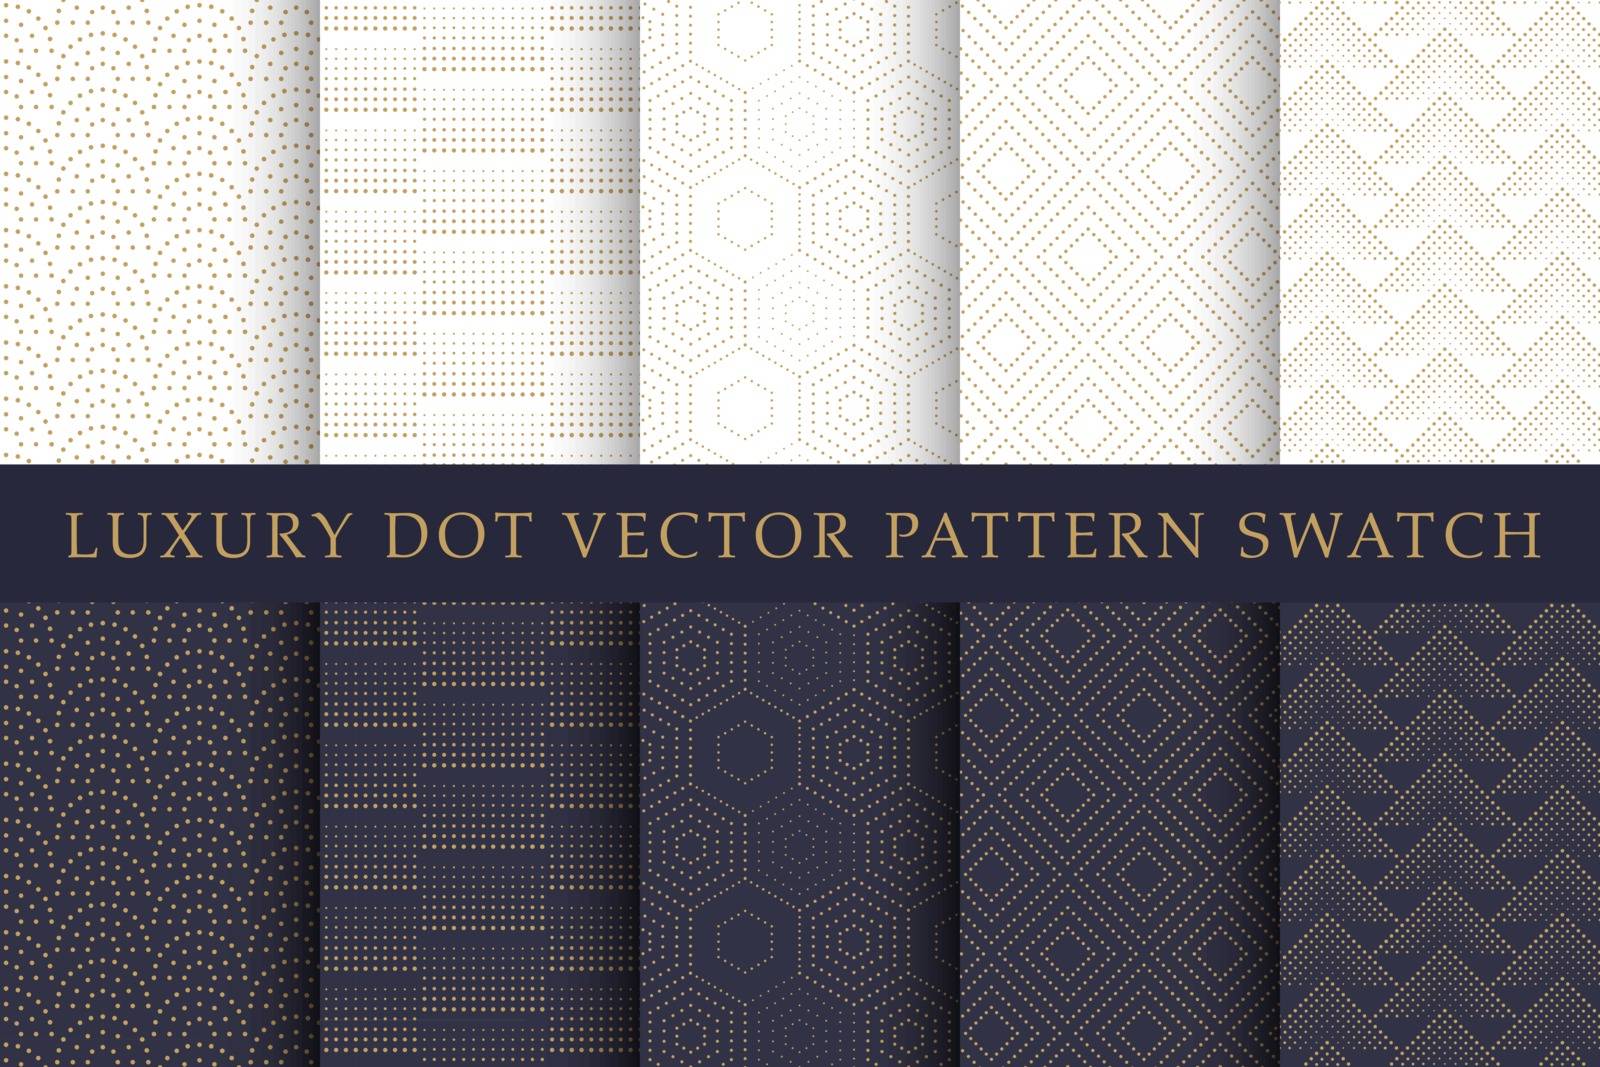 Golden luxury dot vector pattern swatch set by ersp